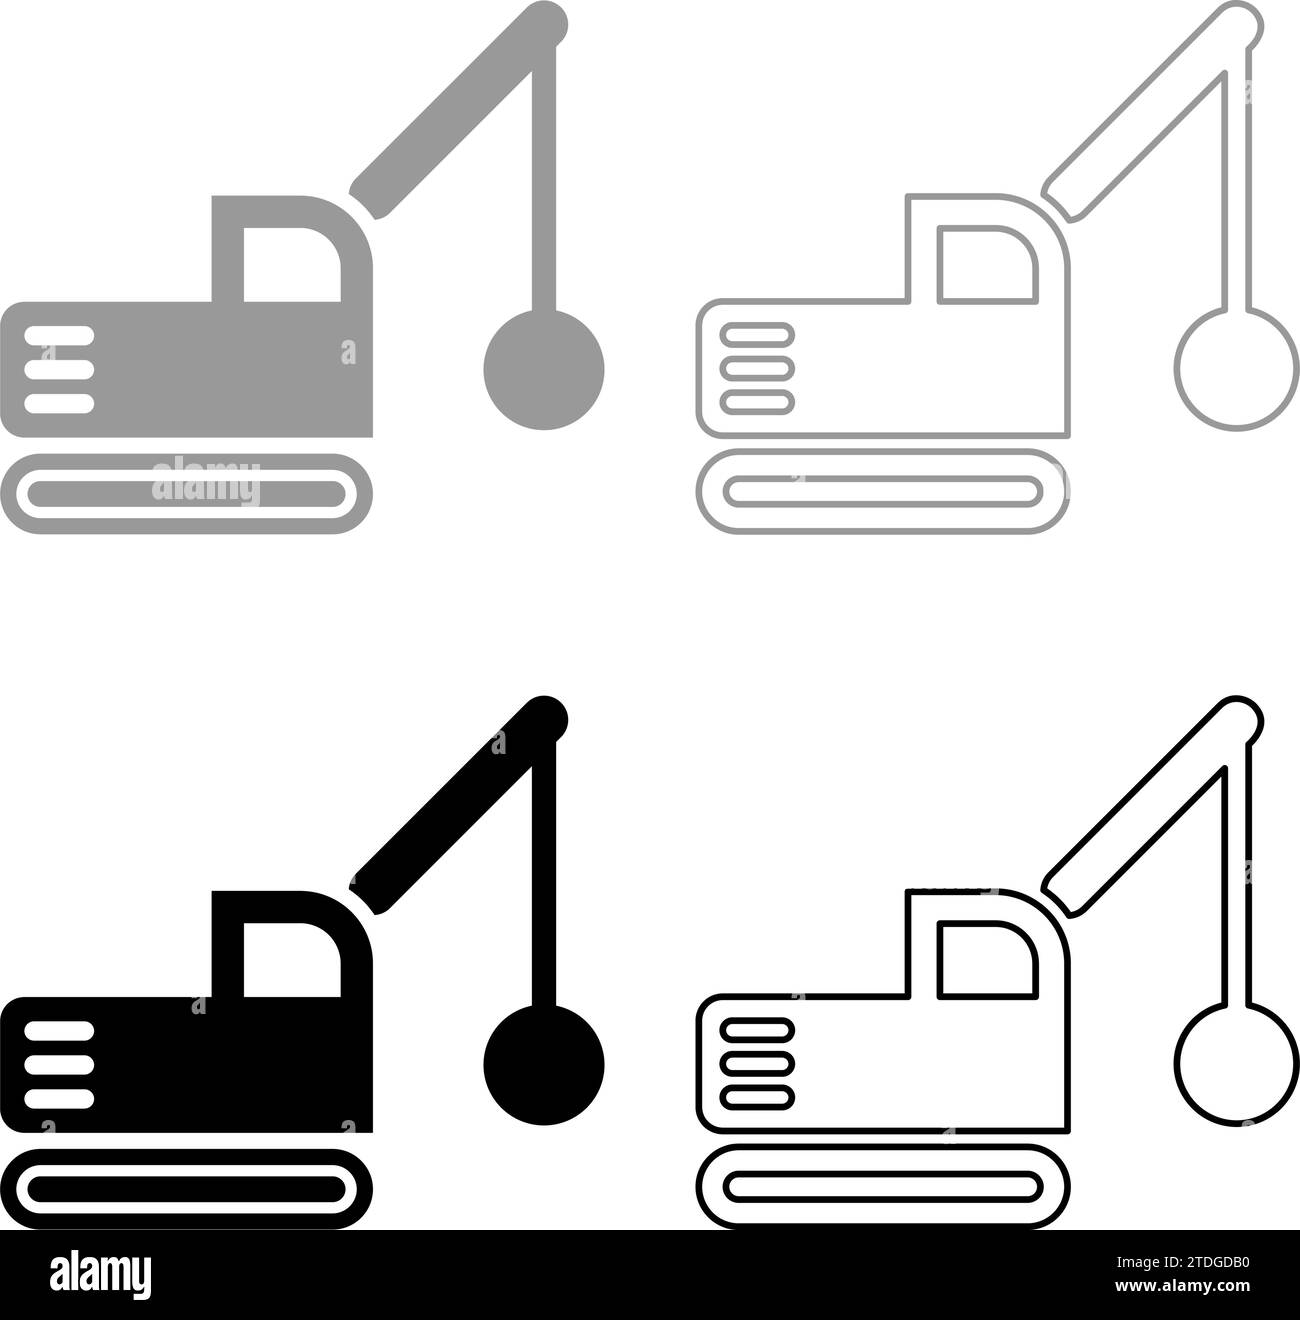 Sloopkraan building machine demolish wrecking ball crane truck set icon grey black color vector illustration image simple solid fill outline contour Stock Vector